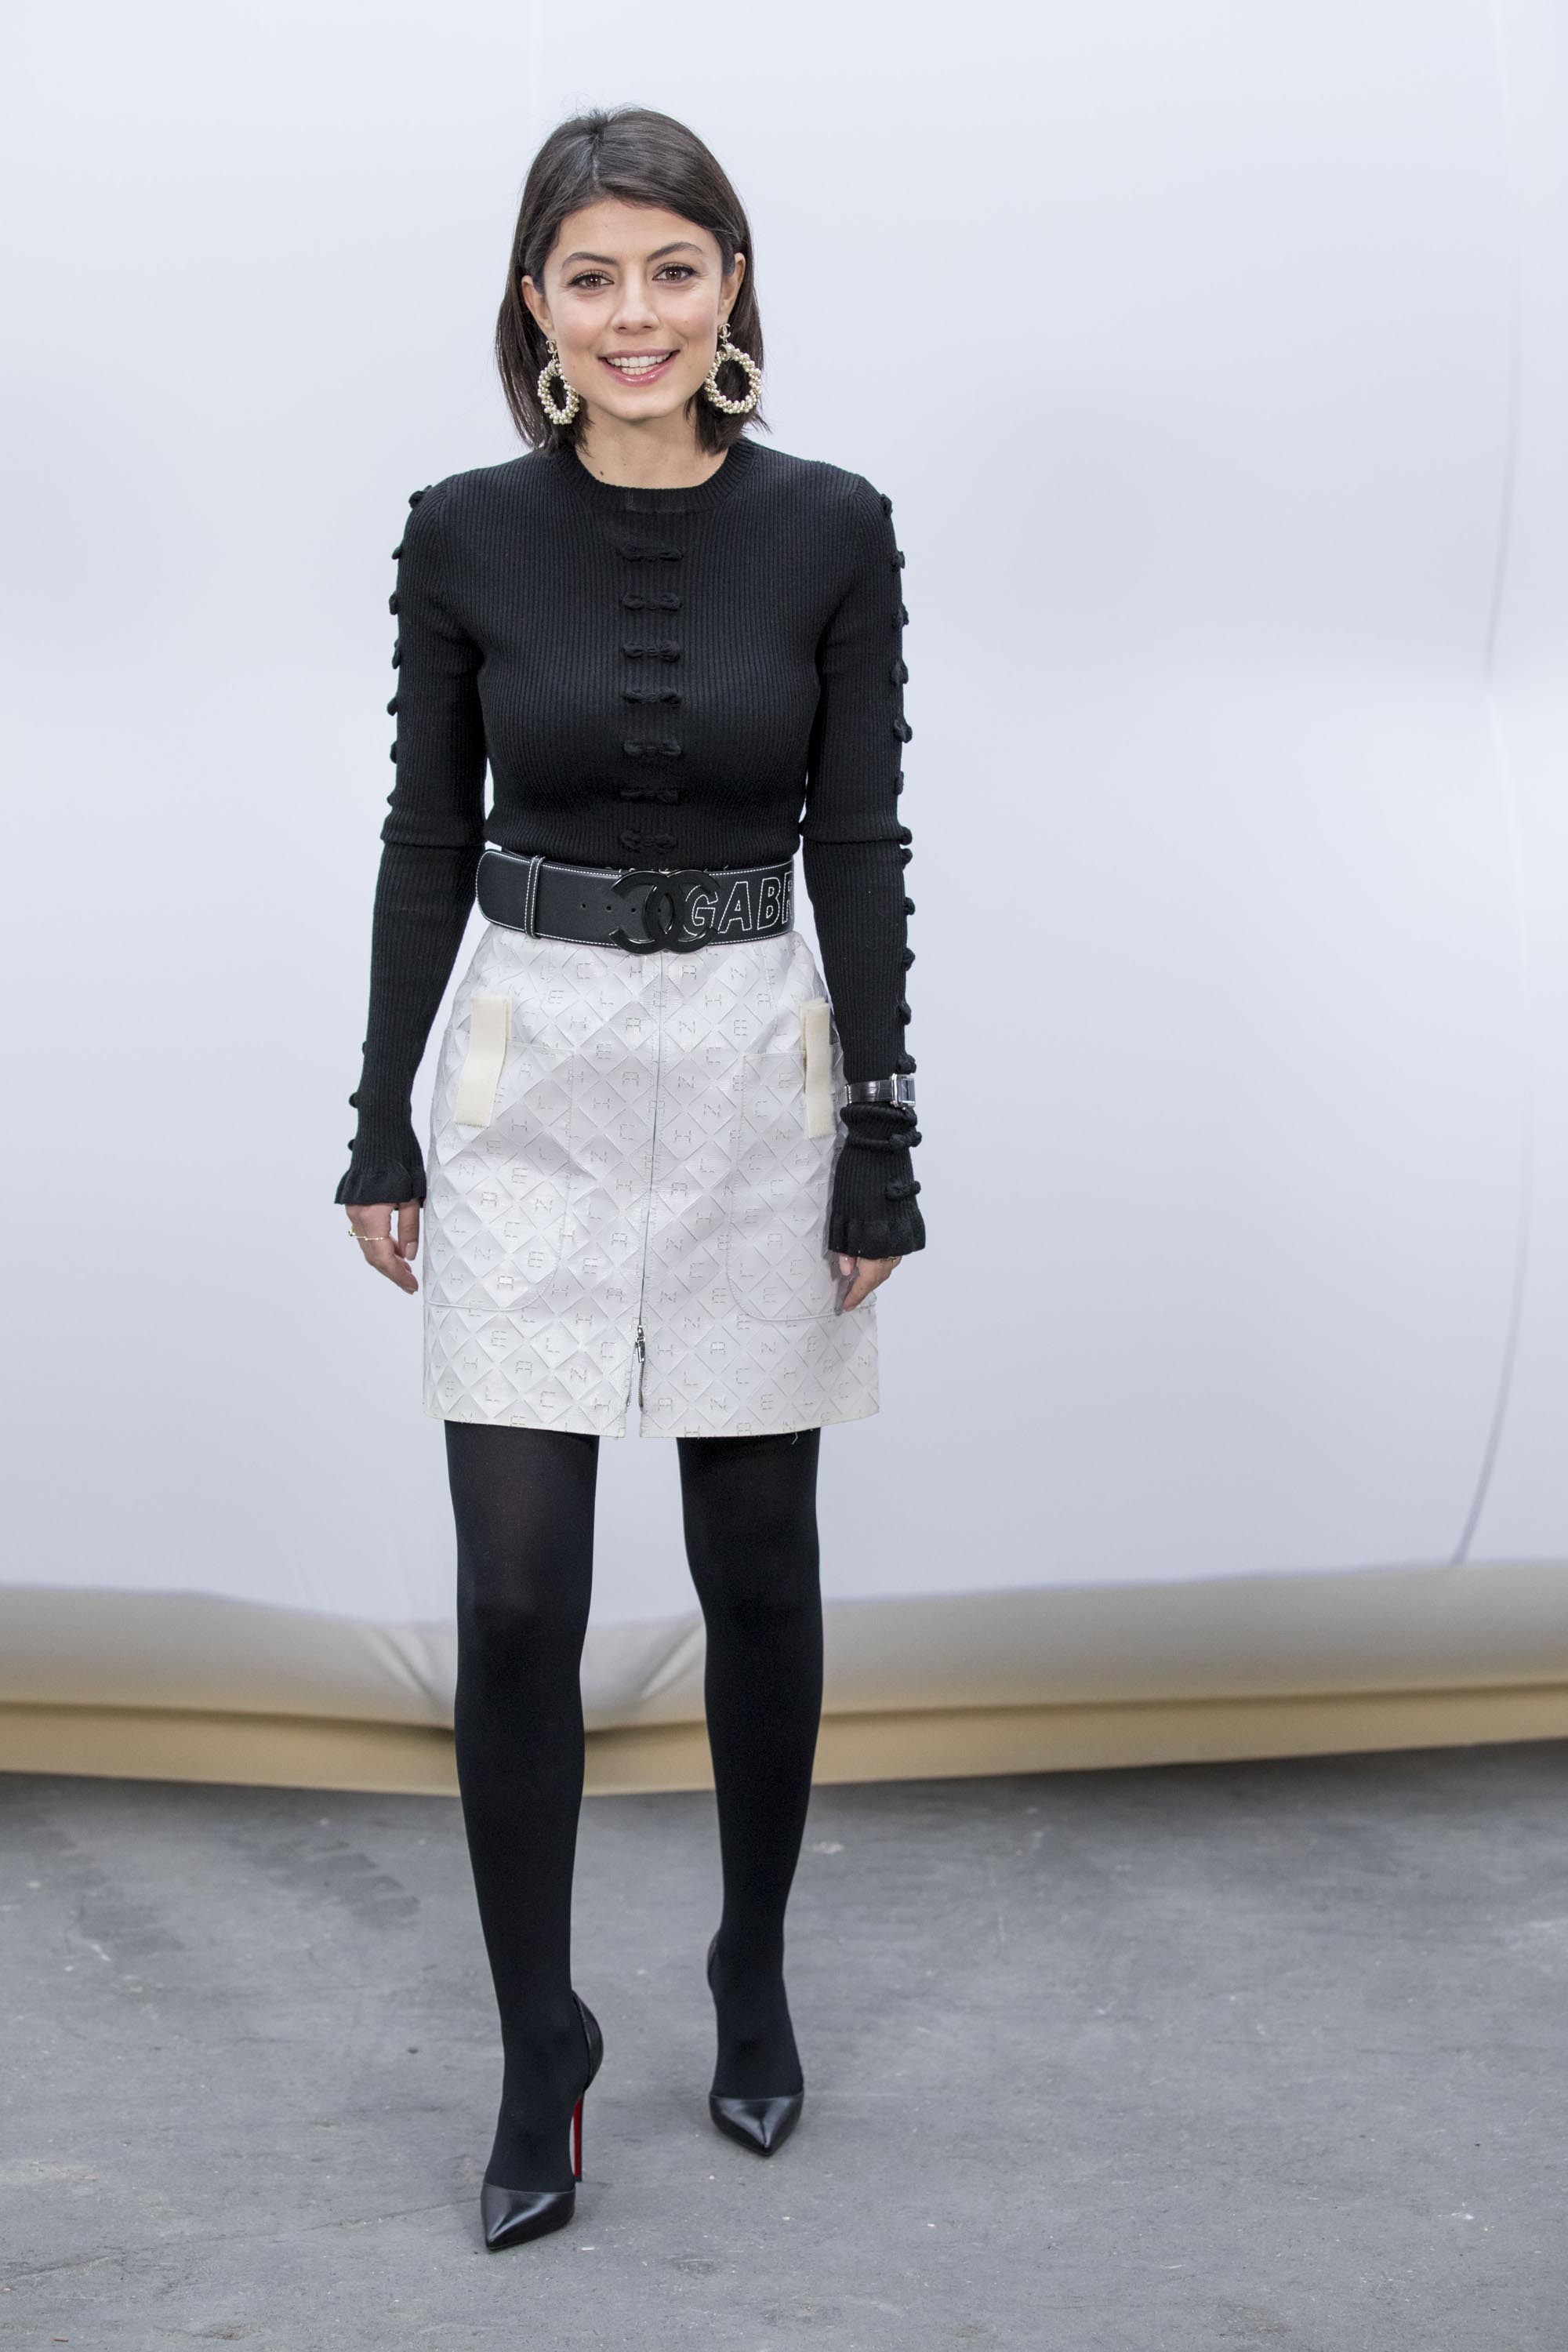 Alessandra Mastronardi attends Chanel show